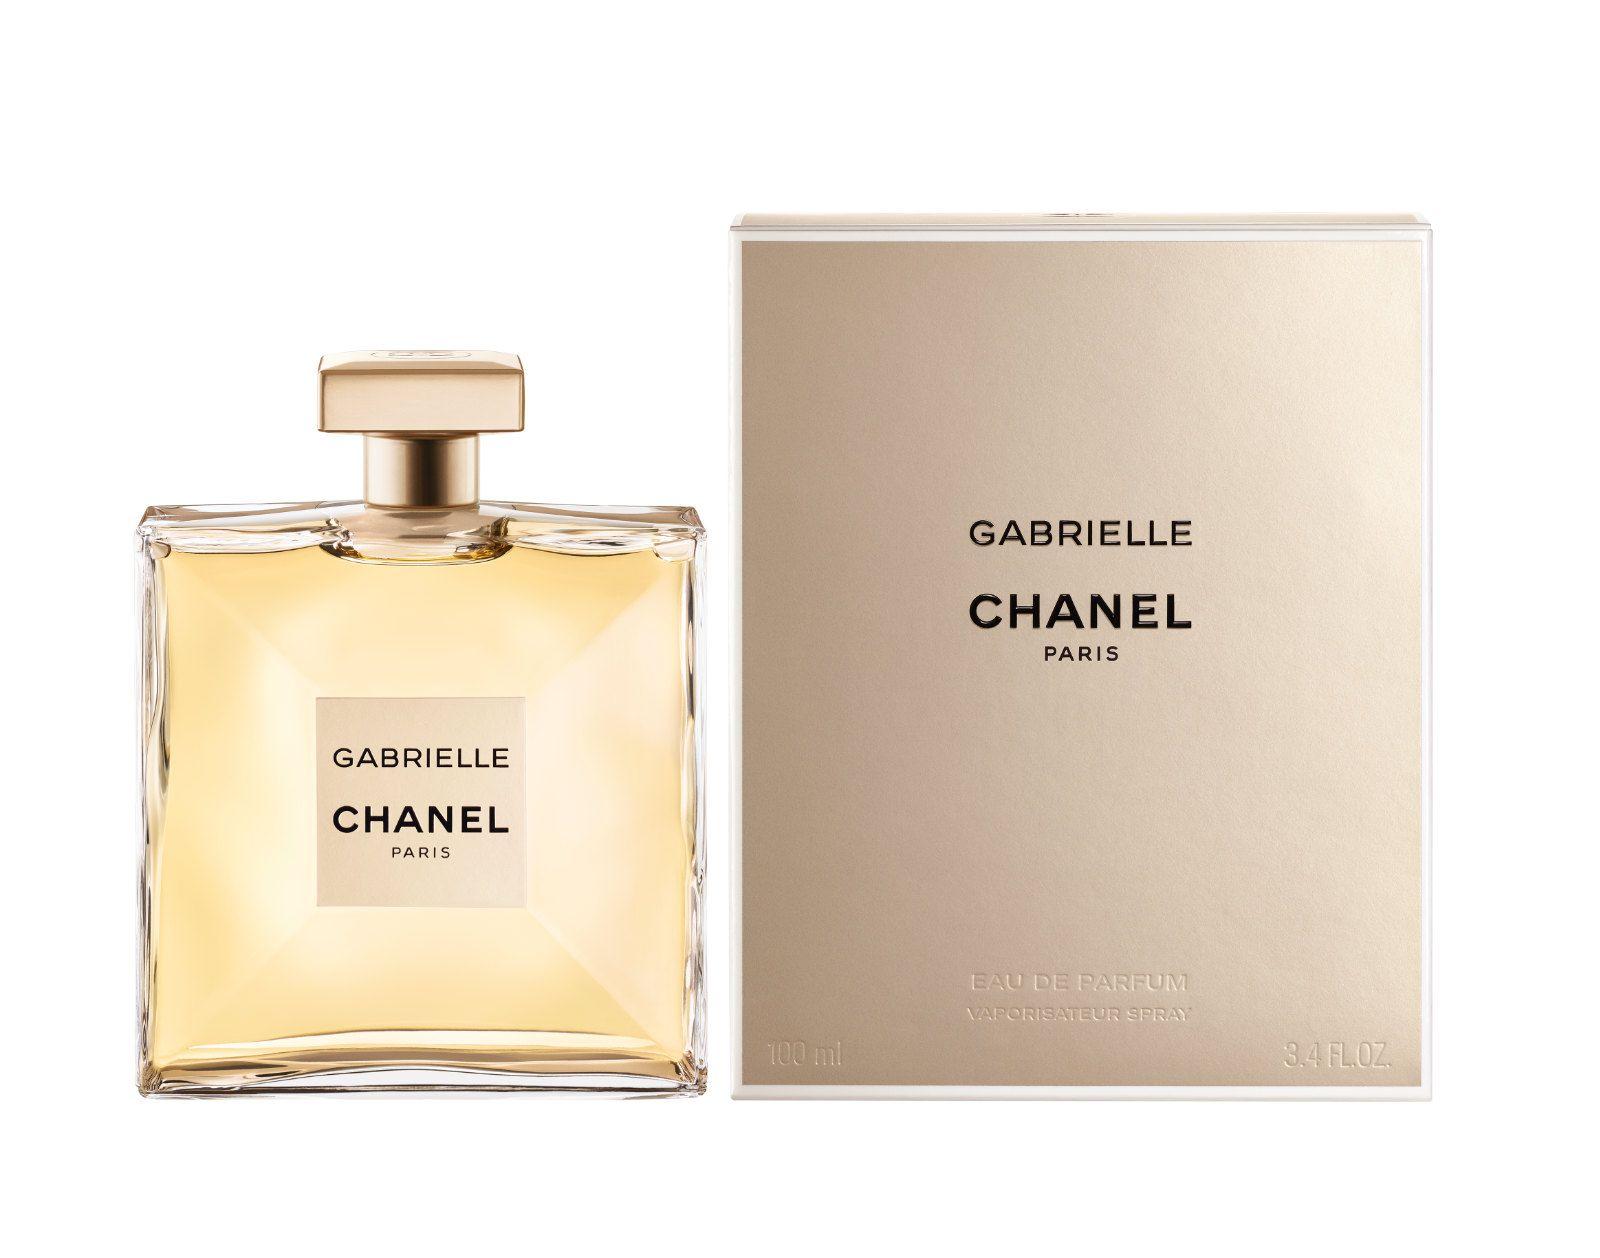 Gabrielle Chanel Paris Logo - Gabrielle Chanel fragrance introduced; Kristen Stewart to model